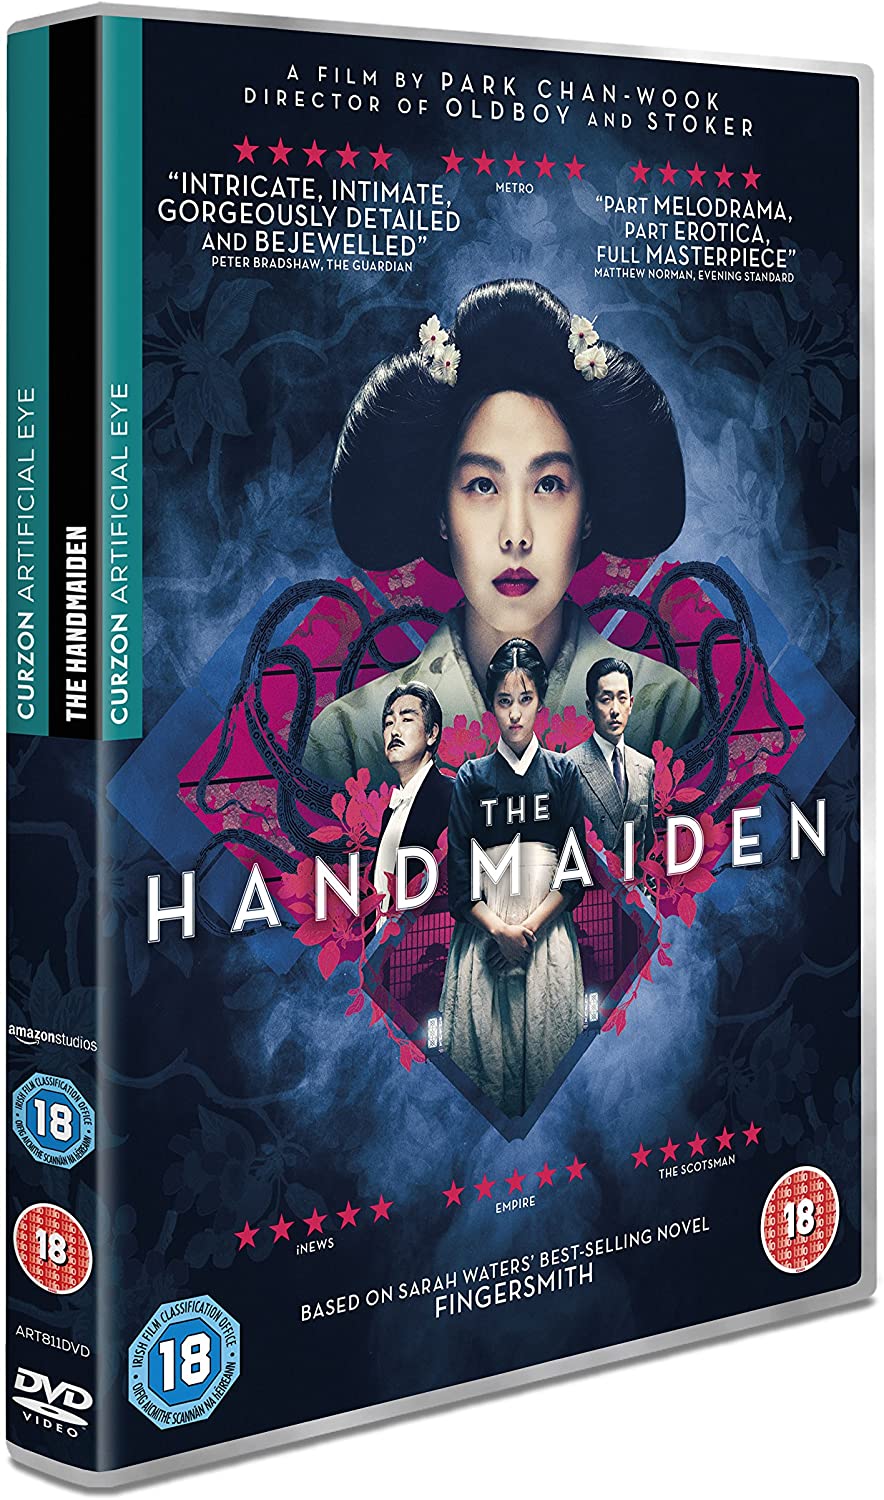 The Handmaiden - Romance/Drama [DVD]